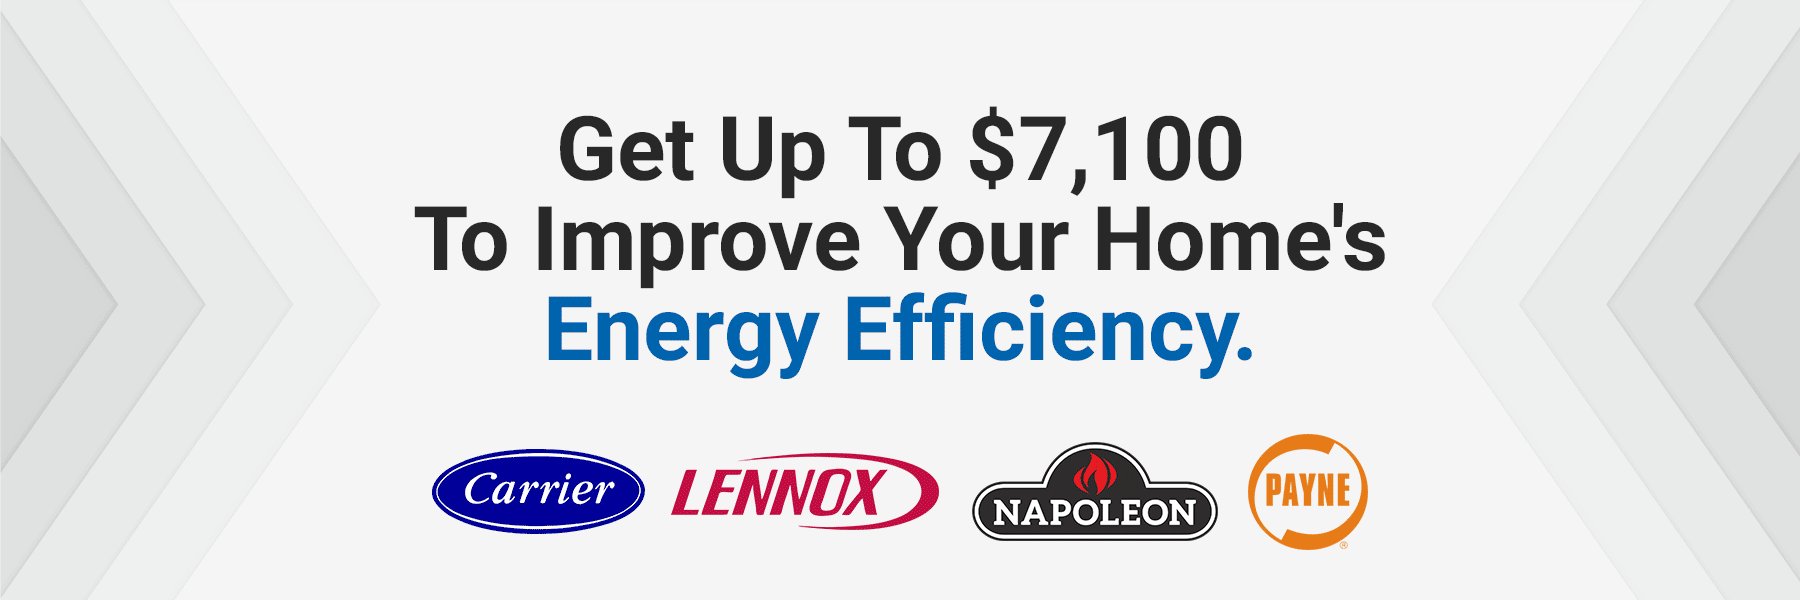 Ontario Lennox XP16 Multi-stage Heat Pump incentives